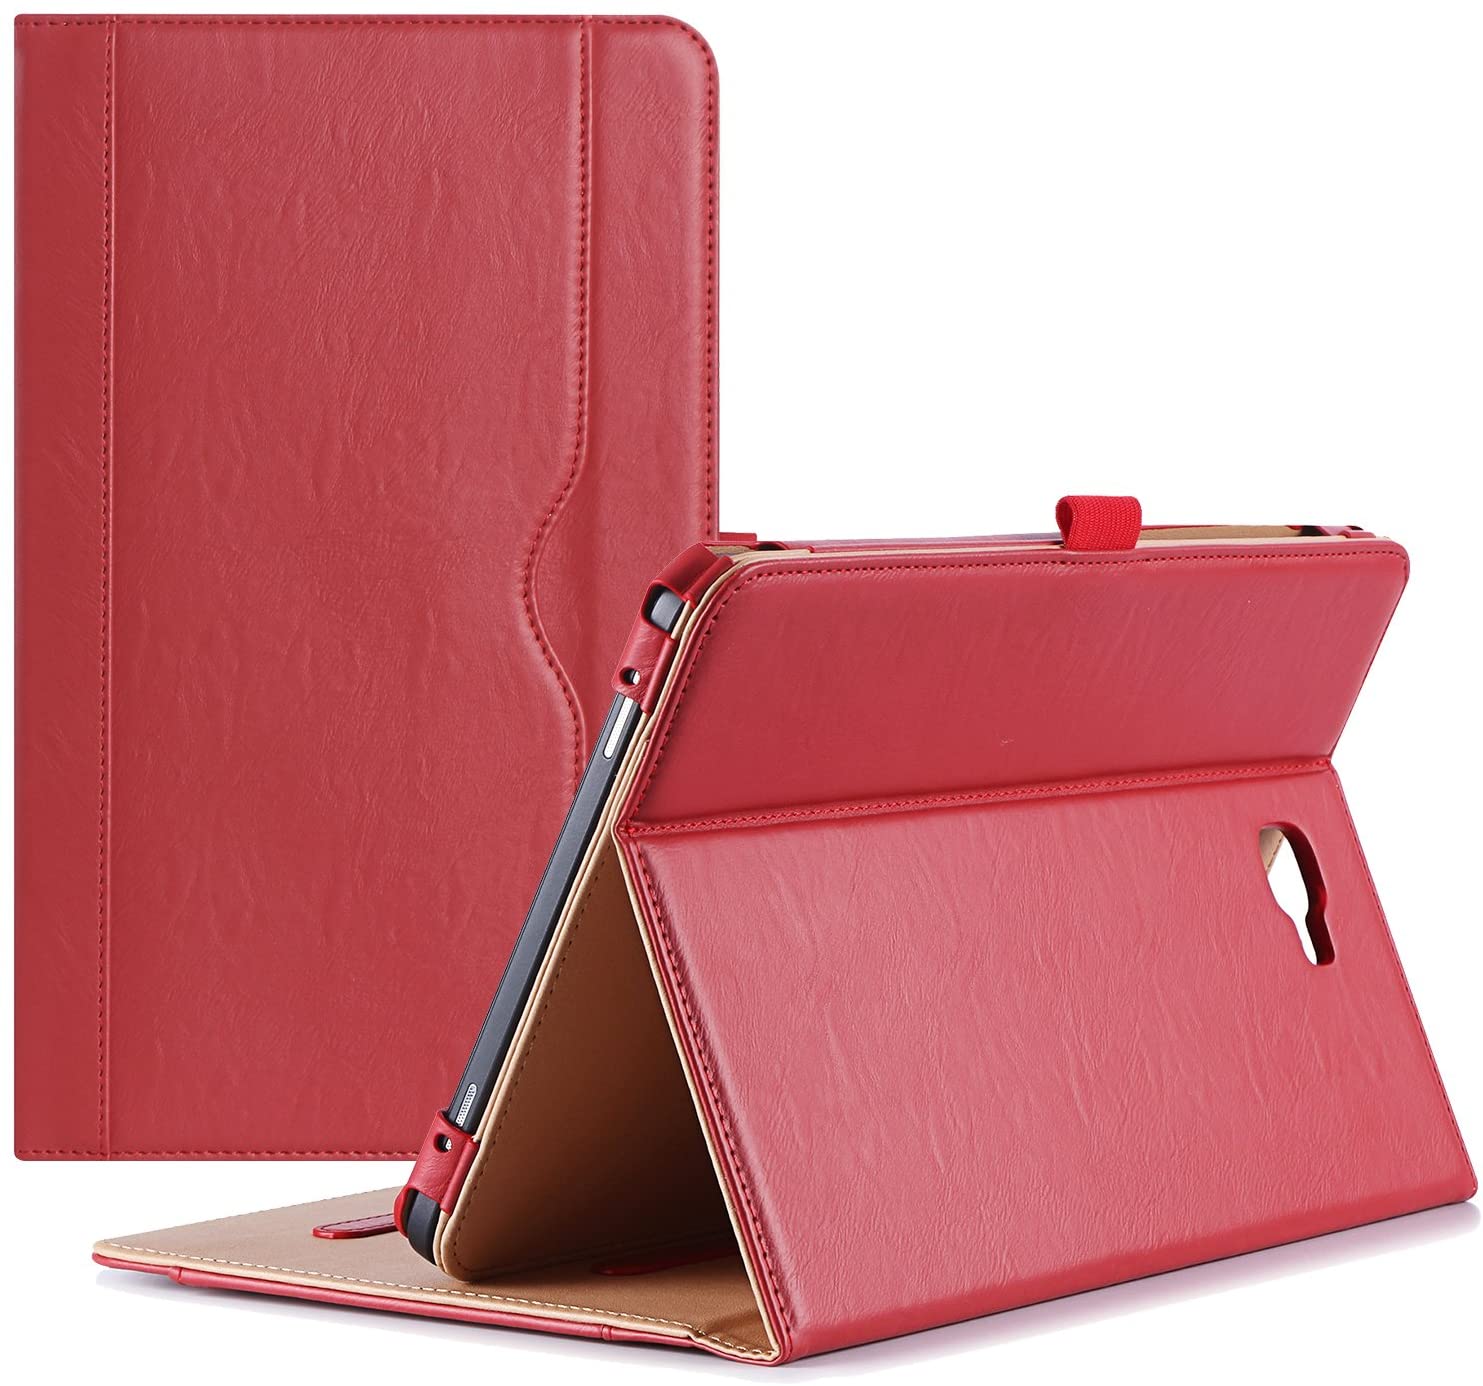 Galaxy Tab A 10.1 2016 T580 Leather Folio Case | ProCase red